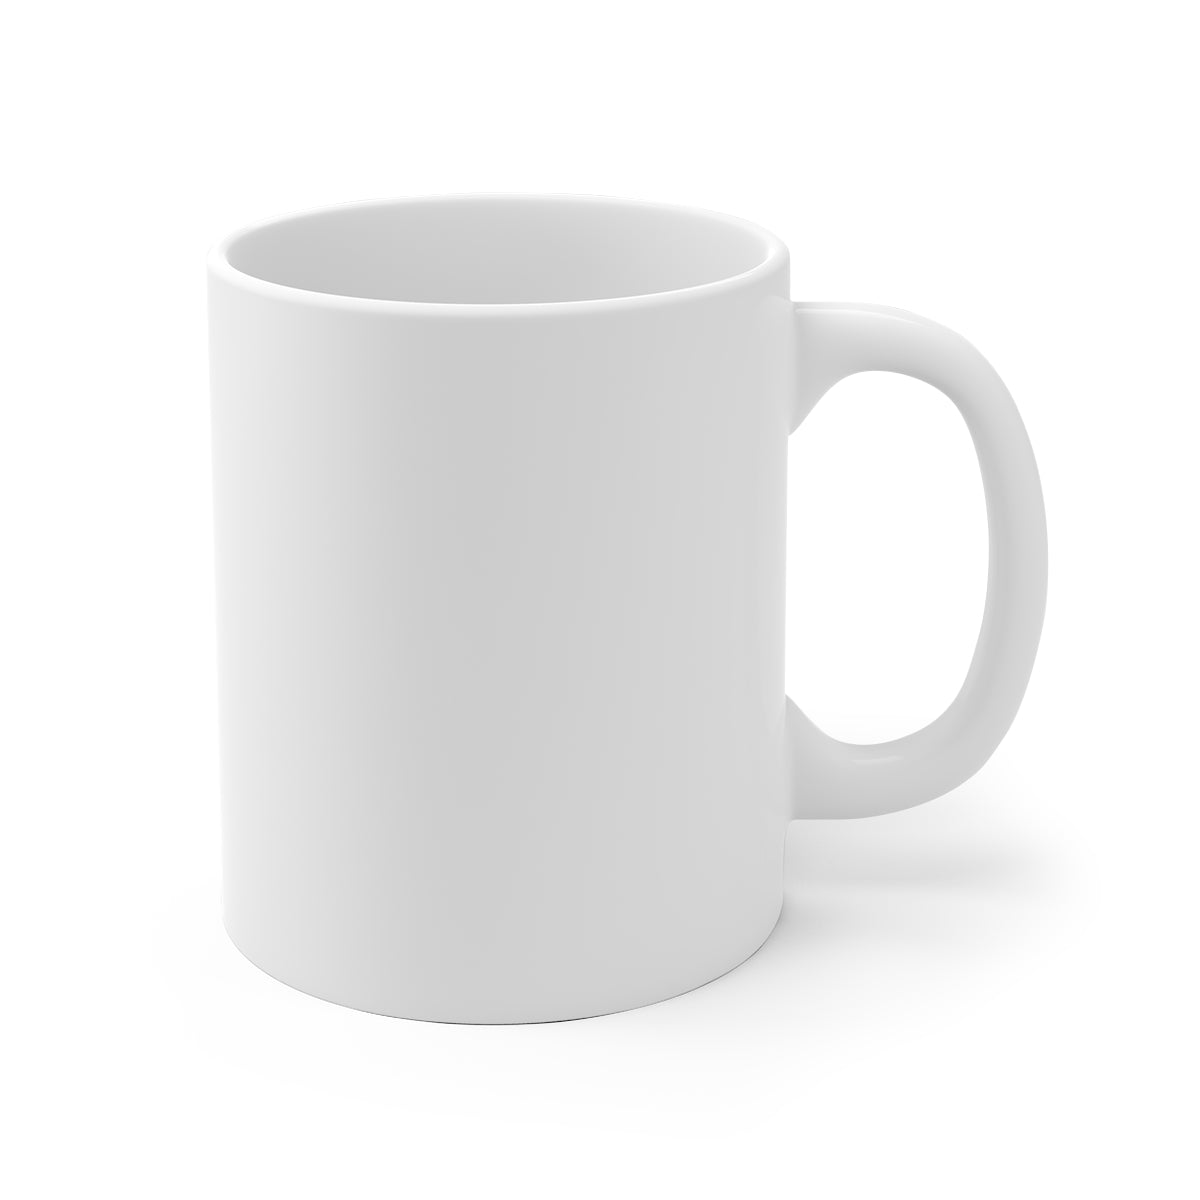 Invest invest invest white ceramic white mug, C shaped handle, for traders